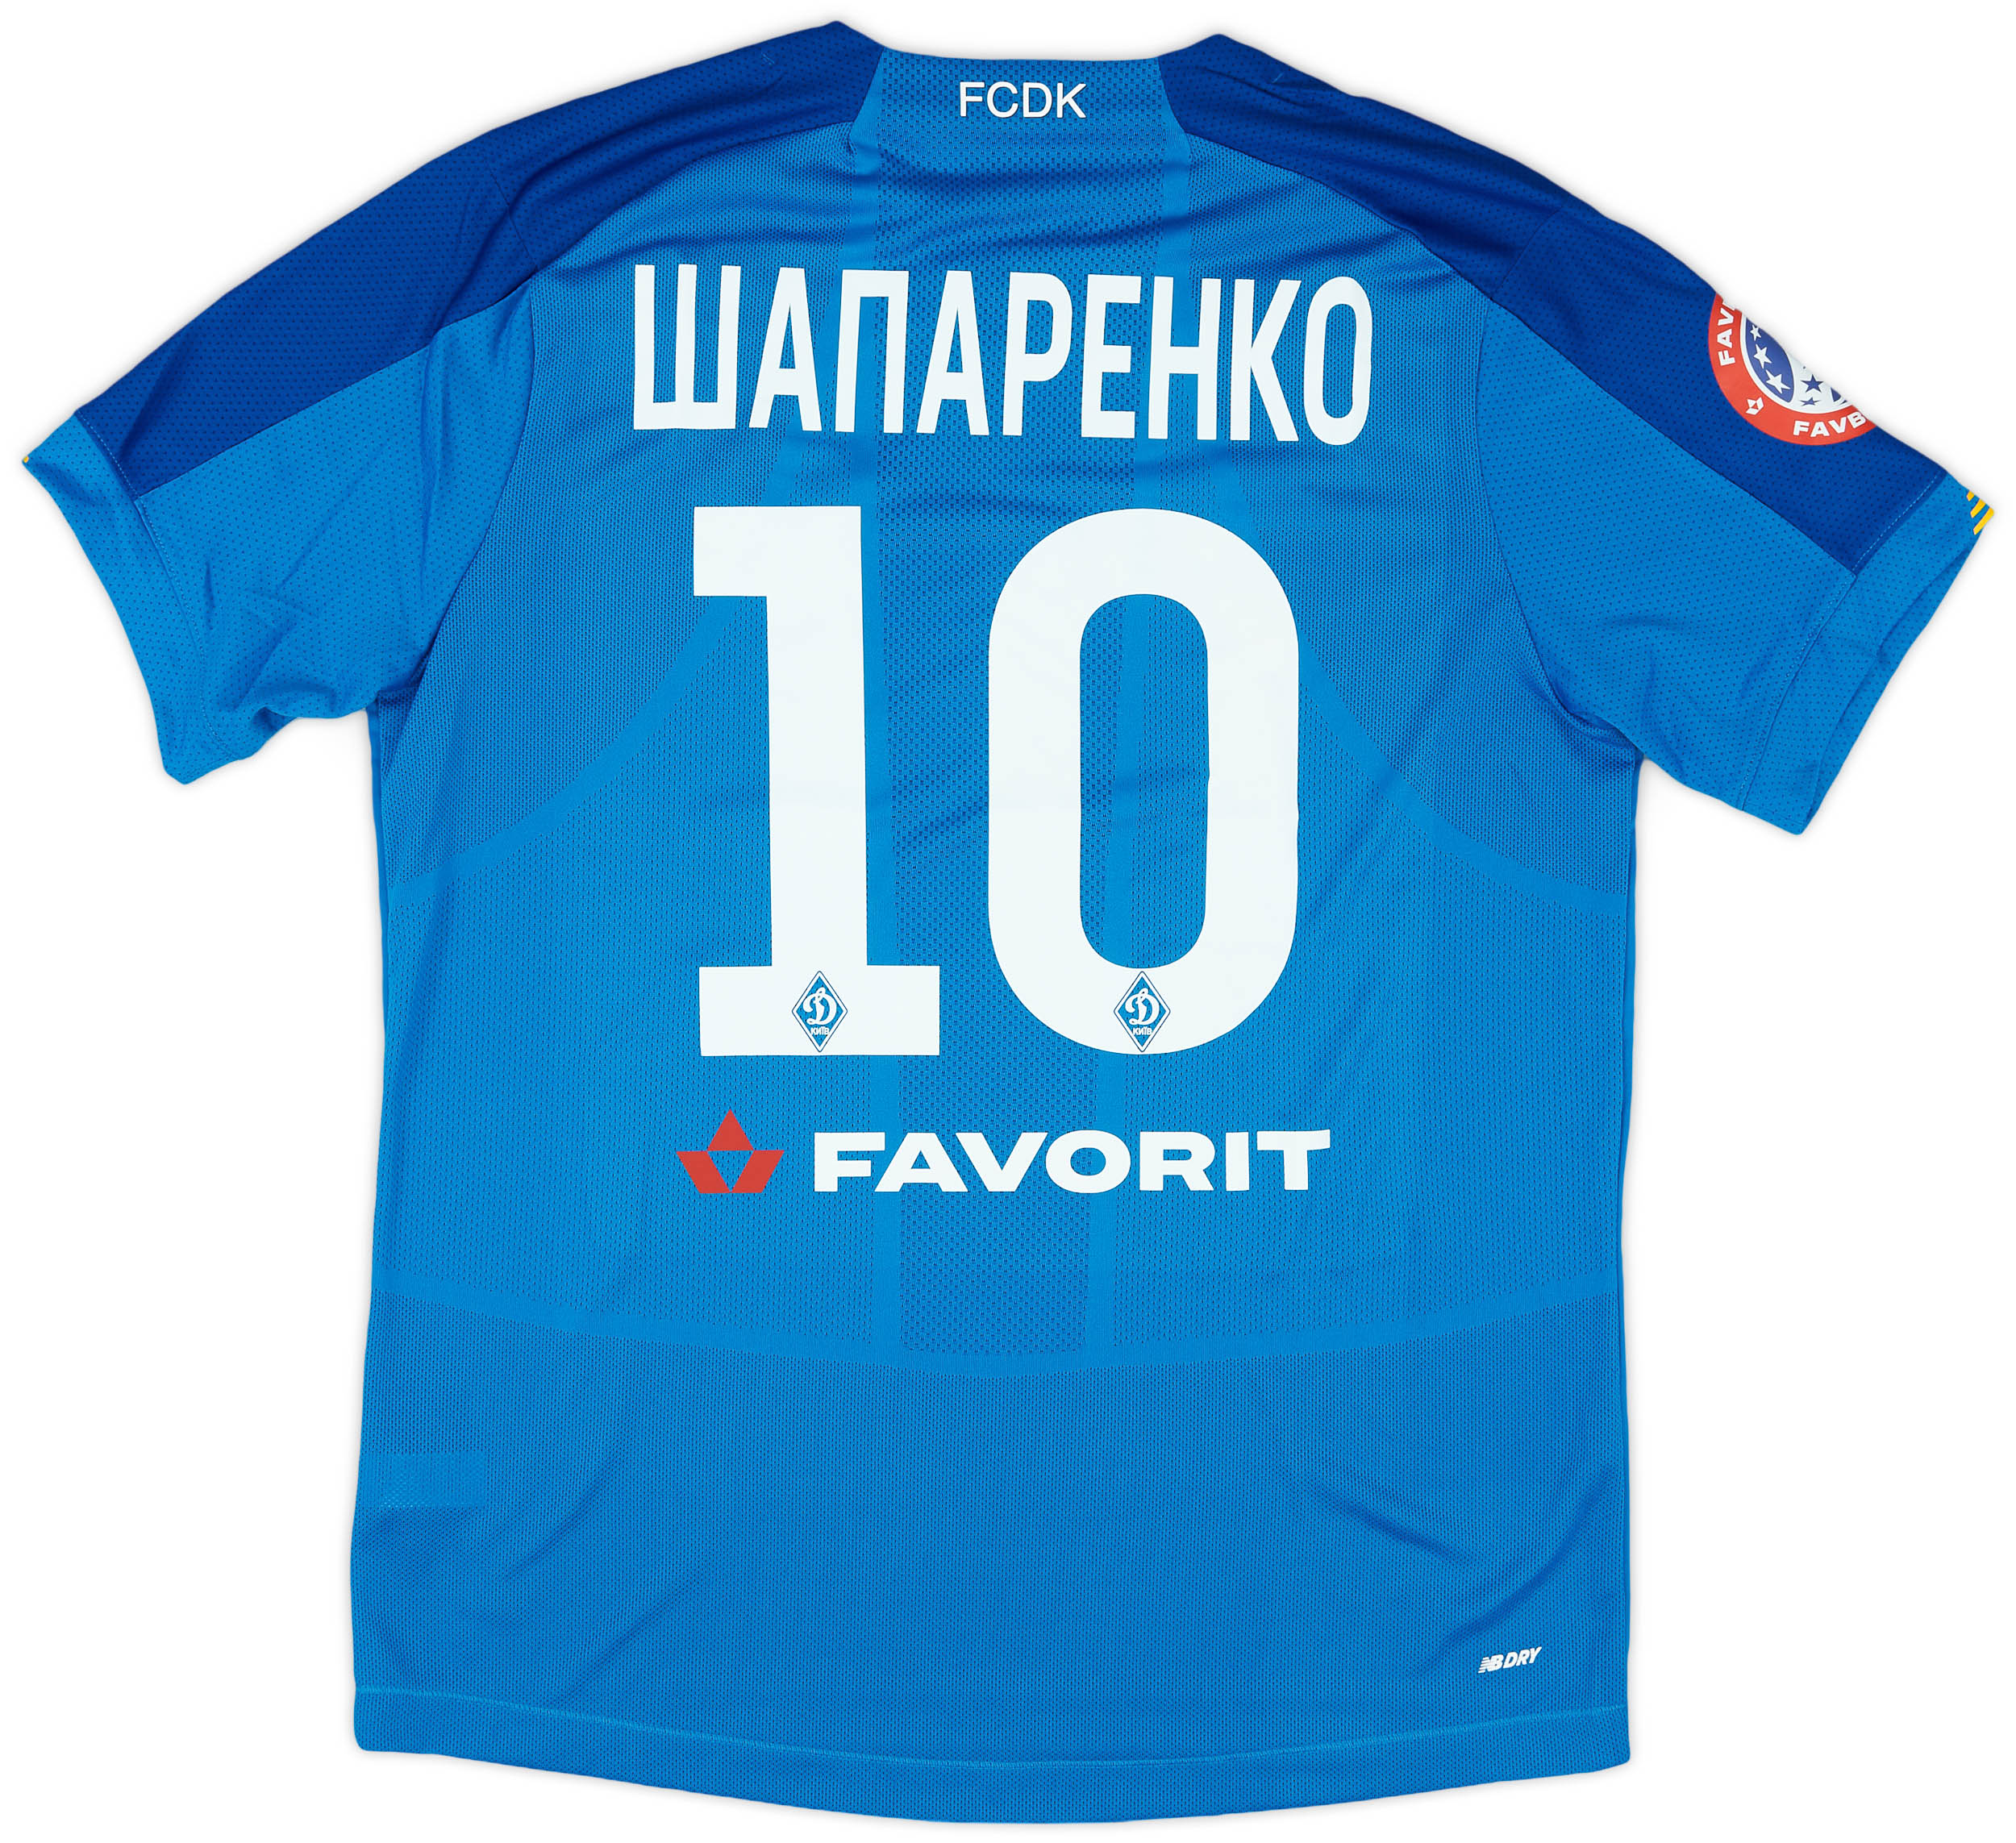 2019-20 Dynamo Kyiv Domestic Away Shirt Шапаренко #10 ()